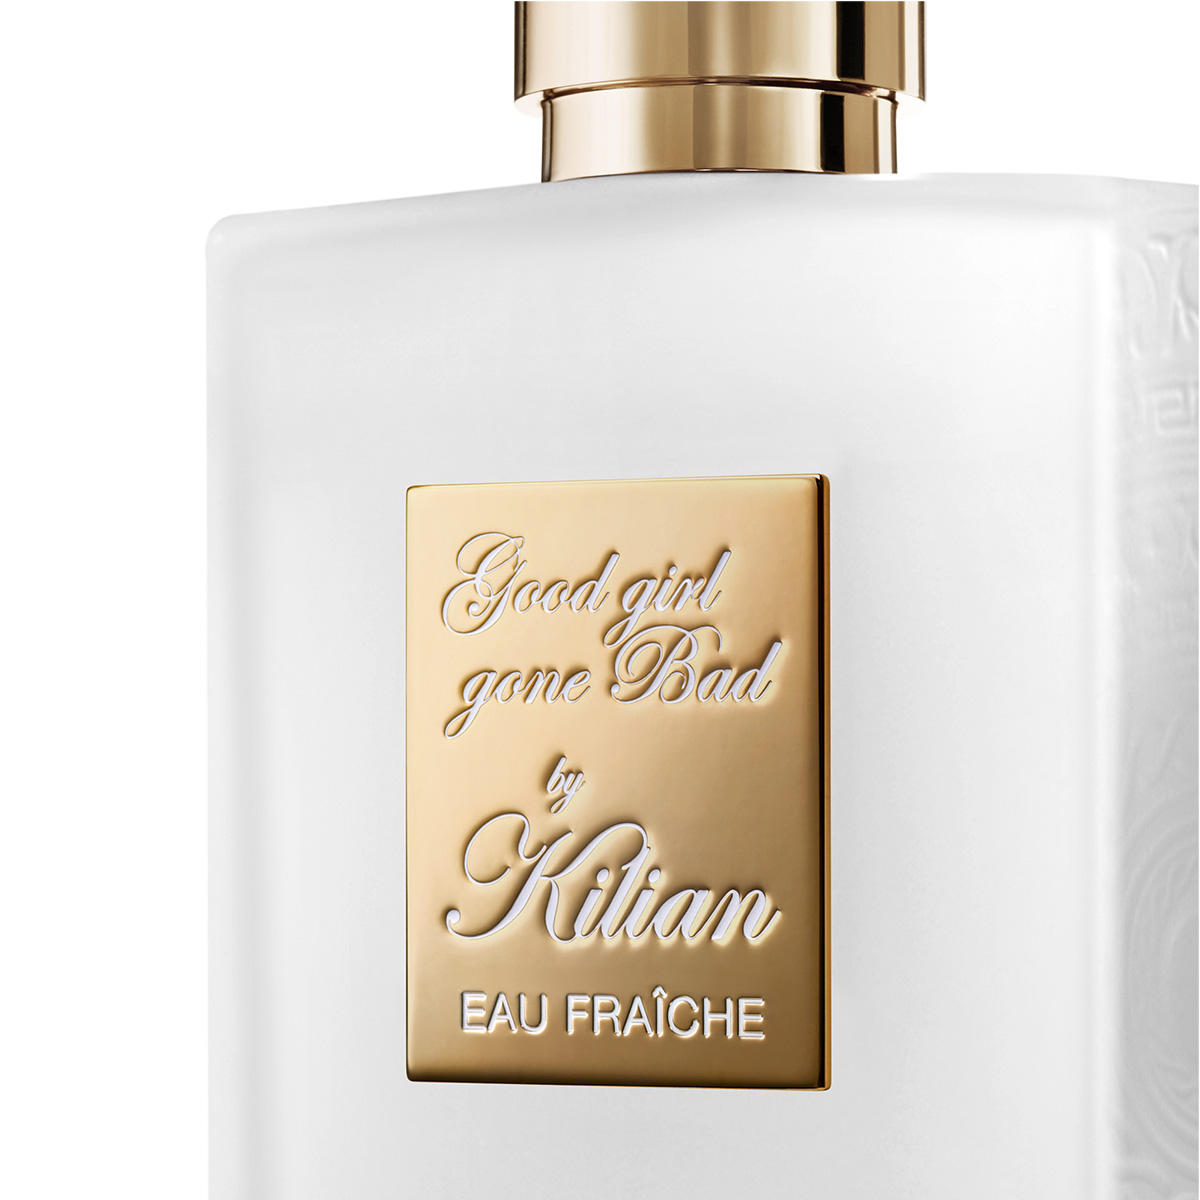 Kilian Paris Good Girl Gone Bad Eau Fraiche Eau de Parfum 50 ml - 2